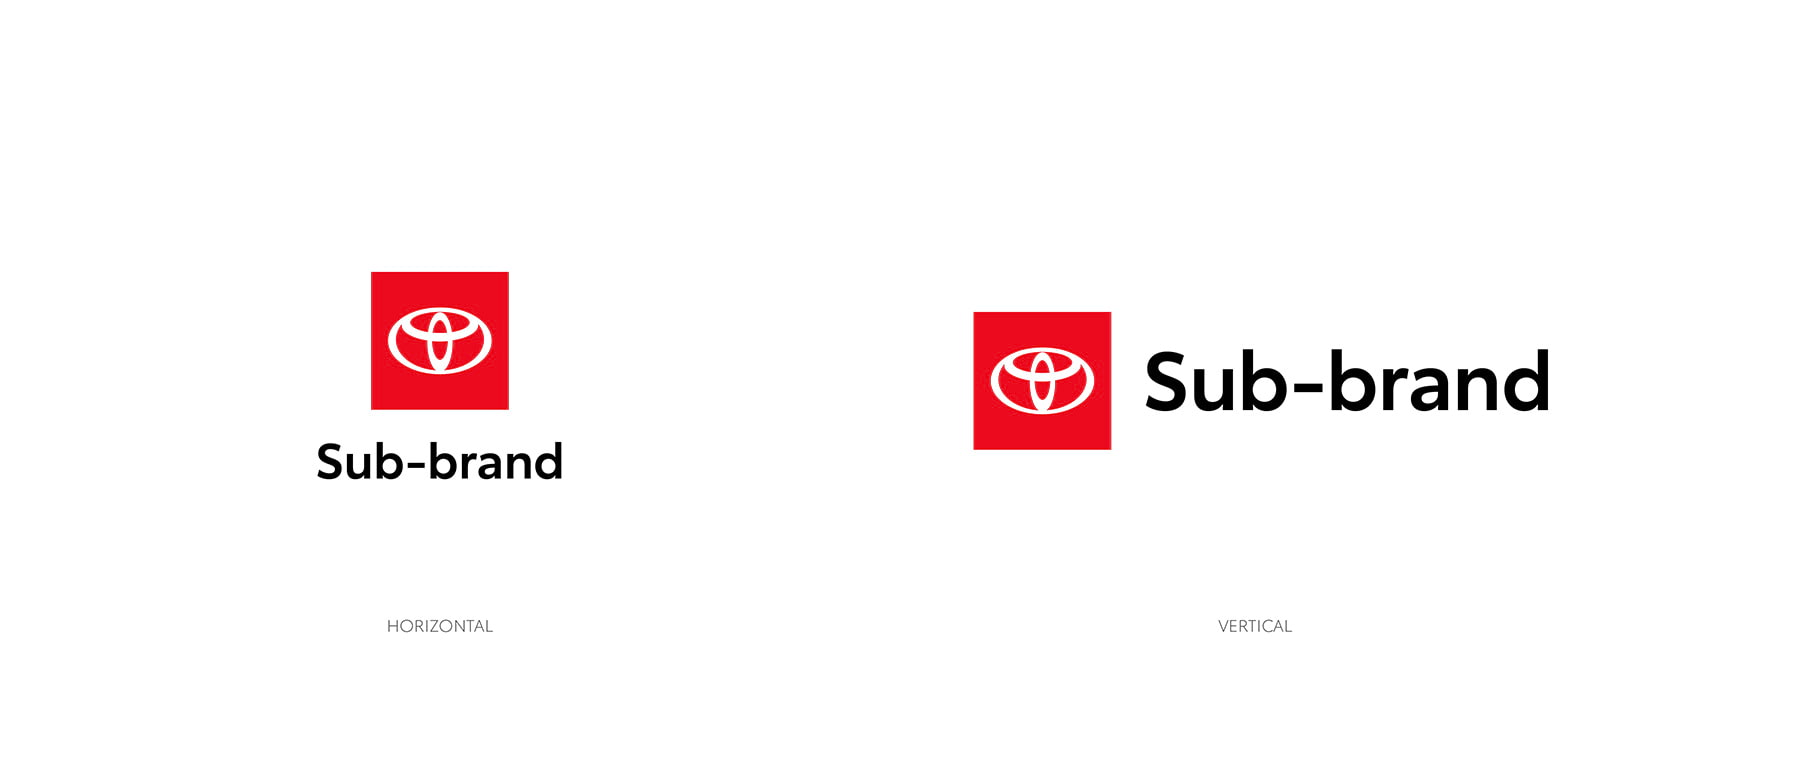 Horizontal and vertical single line sub brand logos